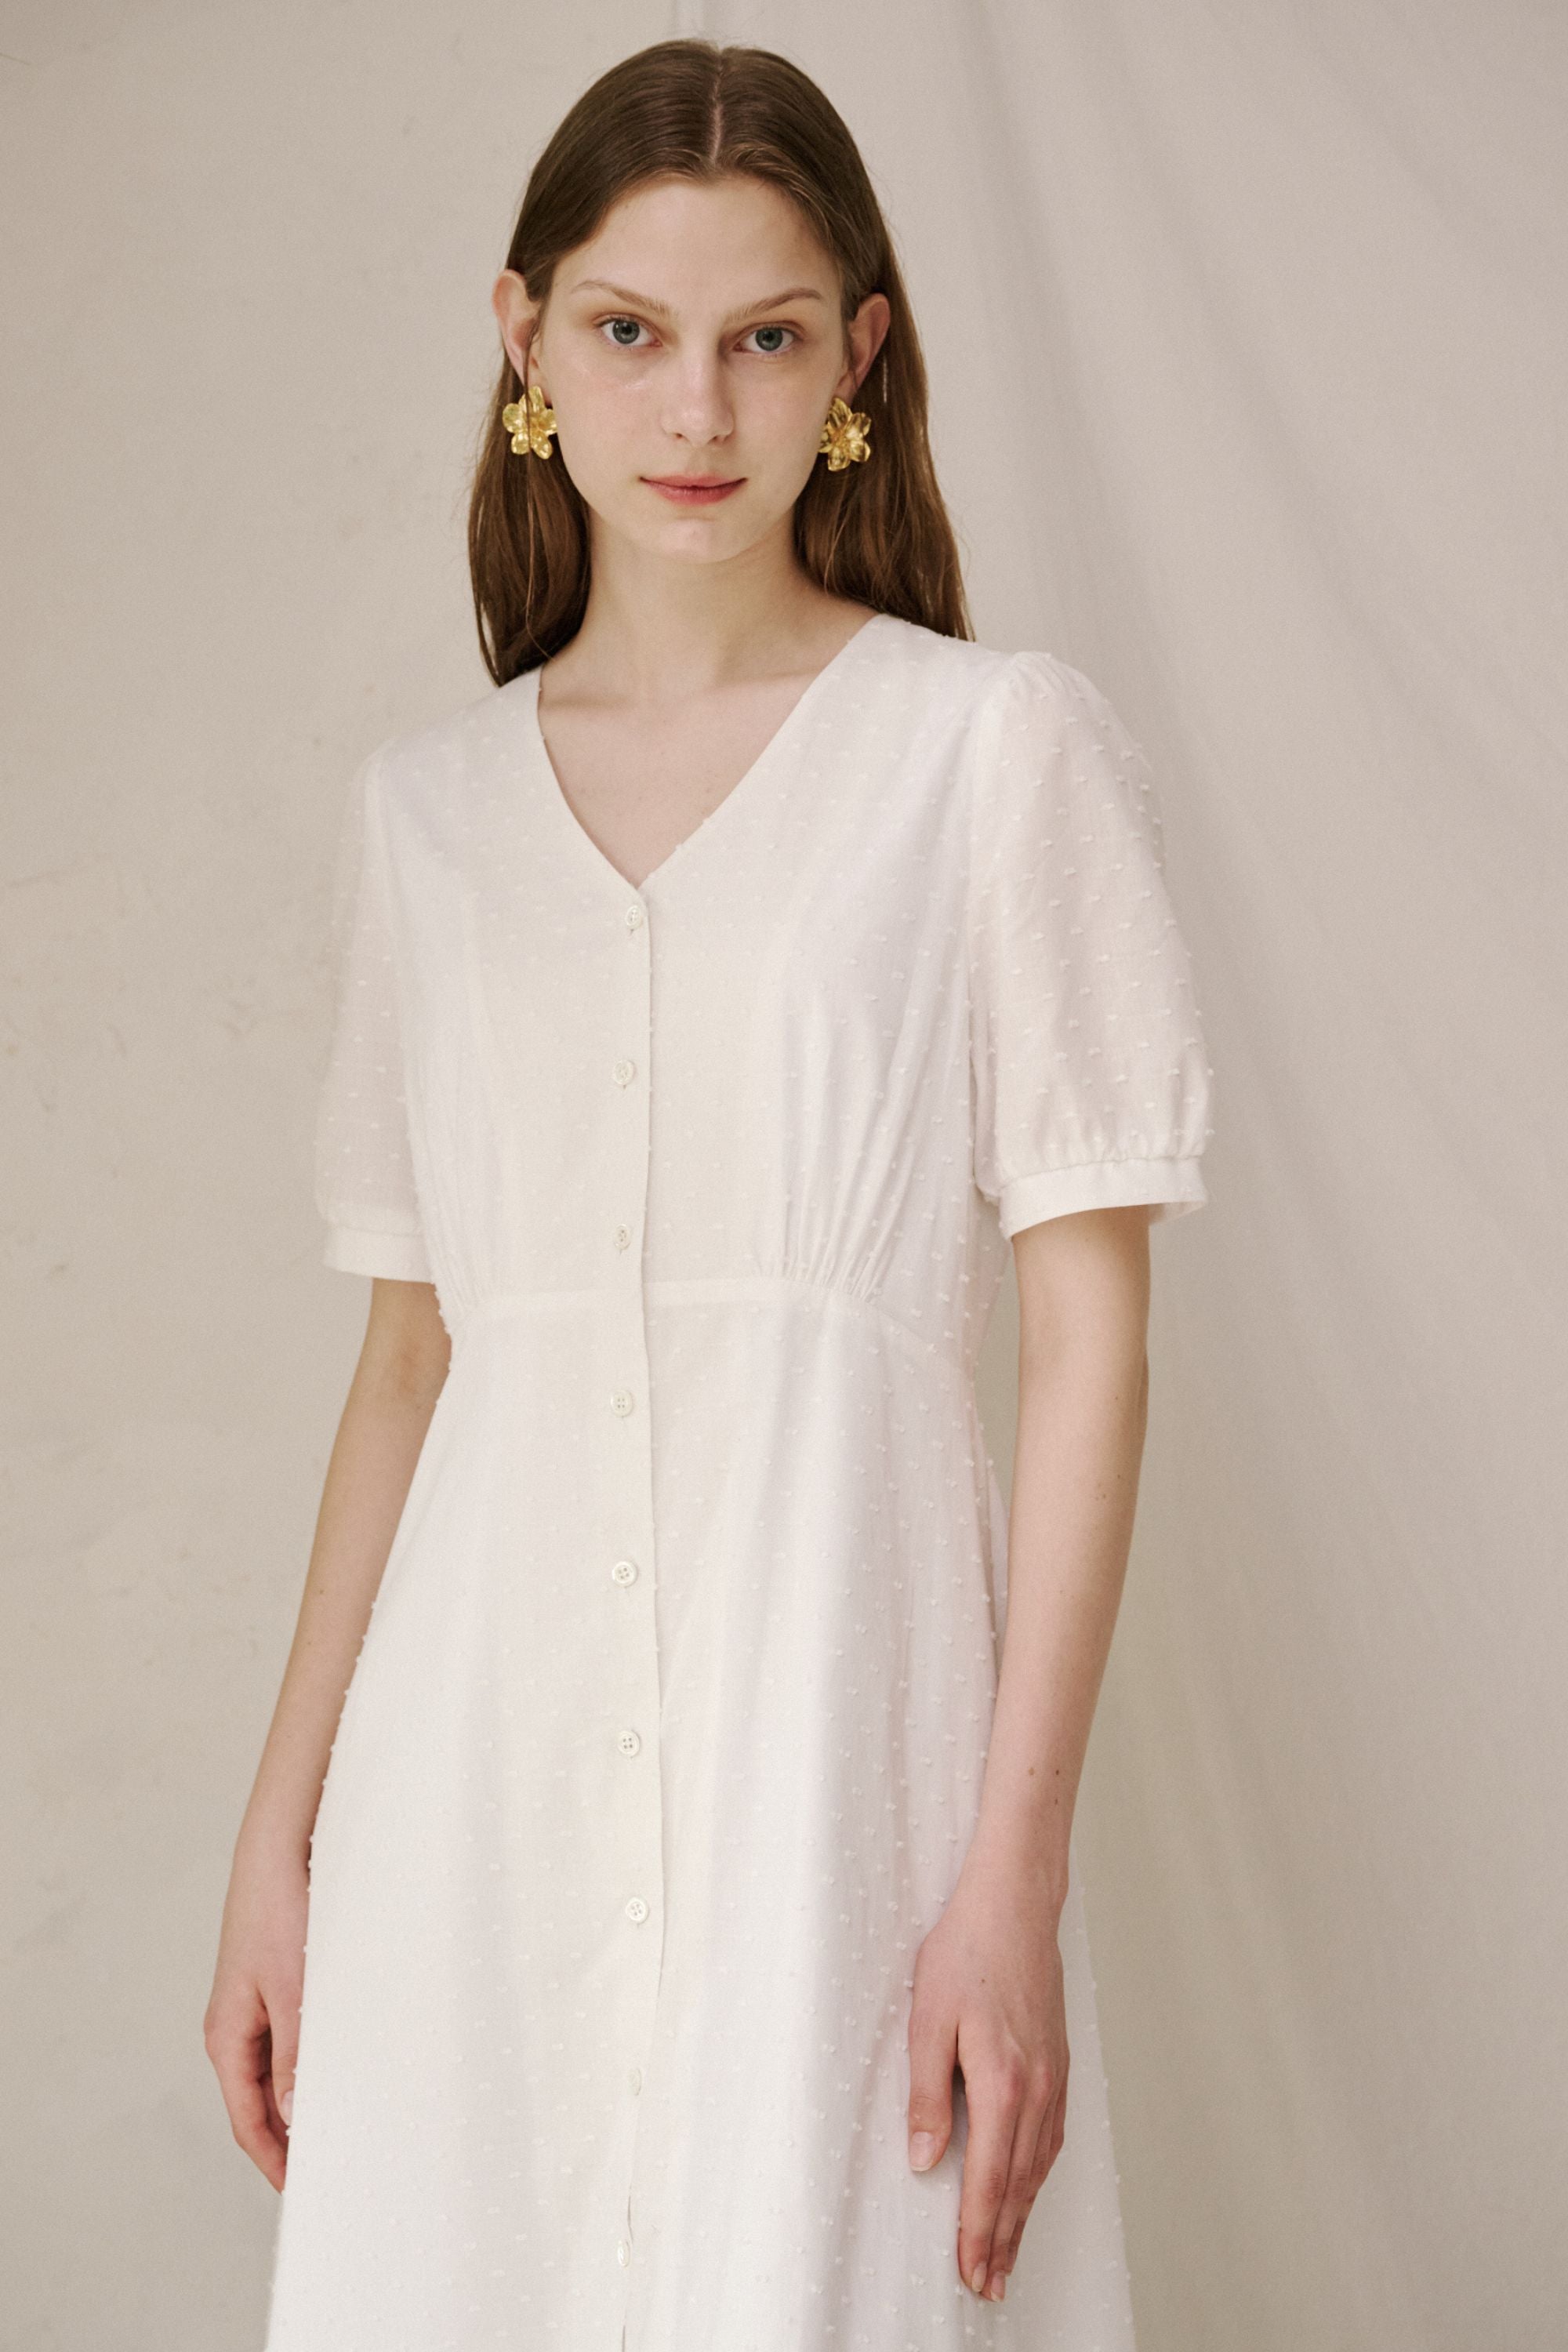 GREENEST - Dot Pattern Dress | White, buy at DOORS NYC